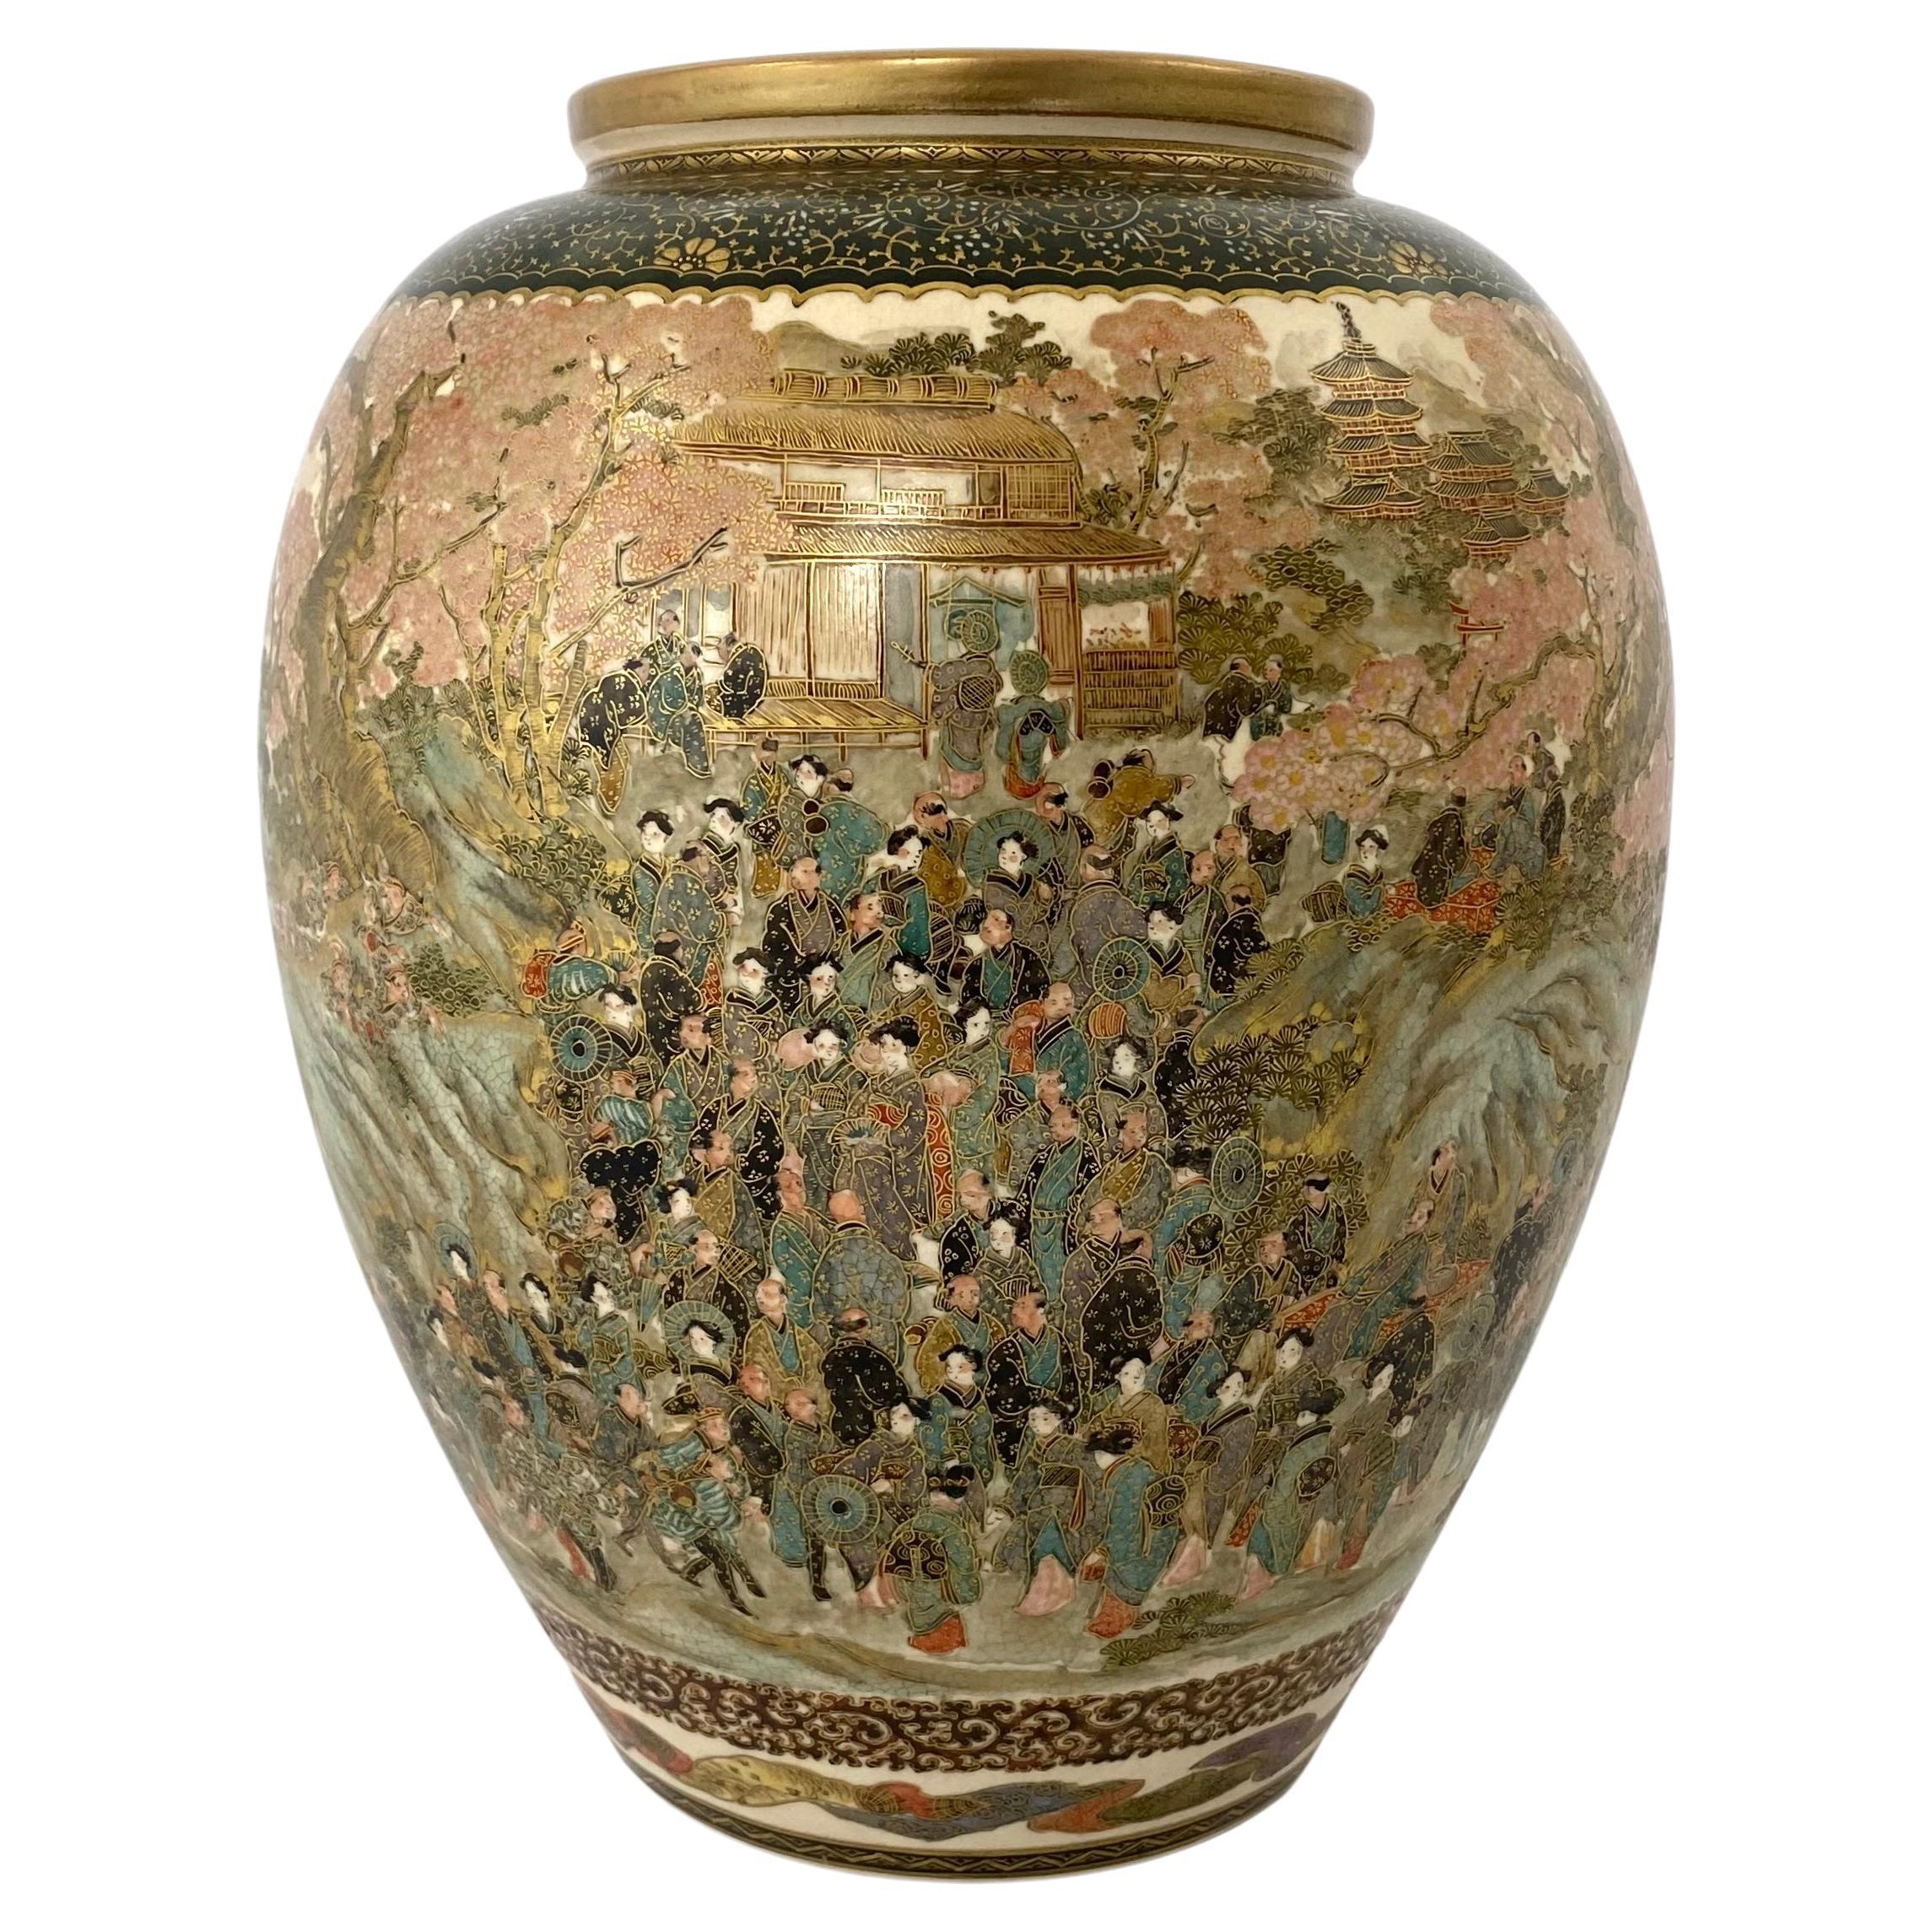 Satsuma Pottery Vase, Festival Gathering, Signed Zenkozan, Meiji Period